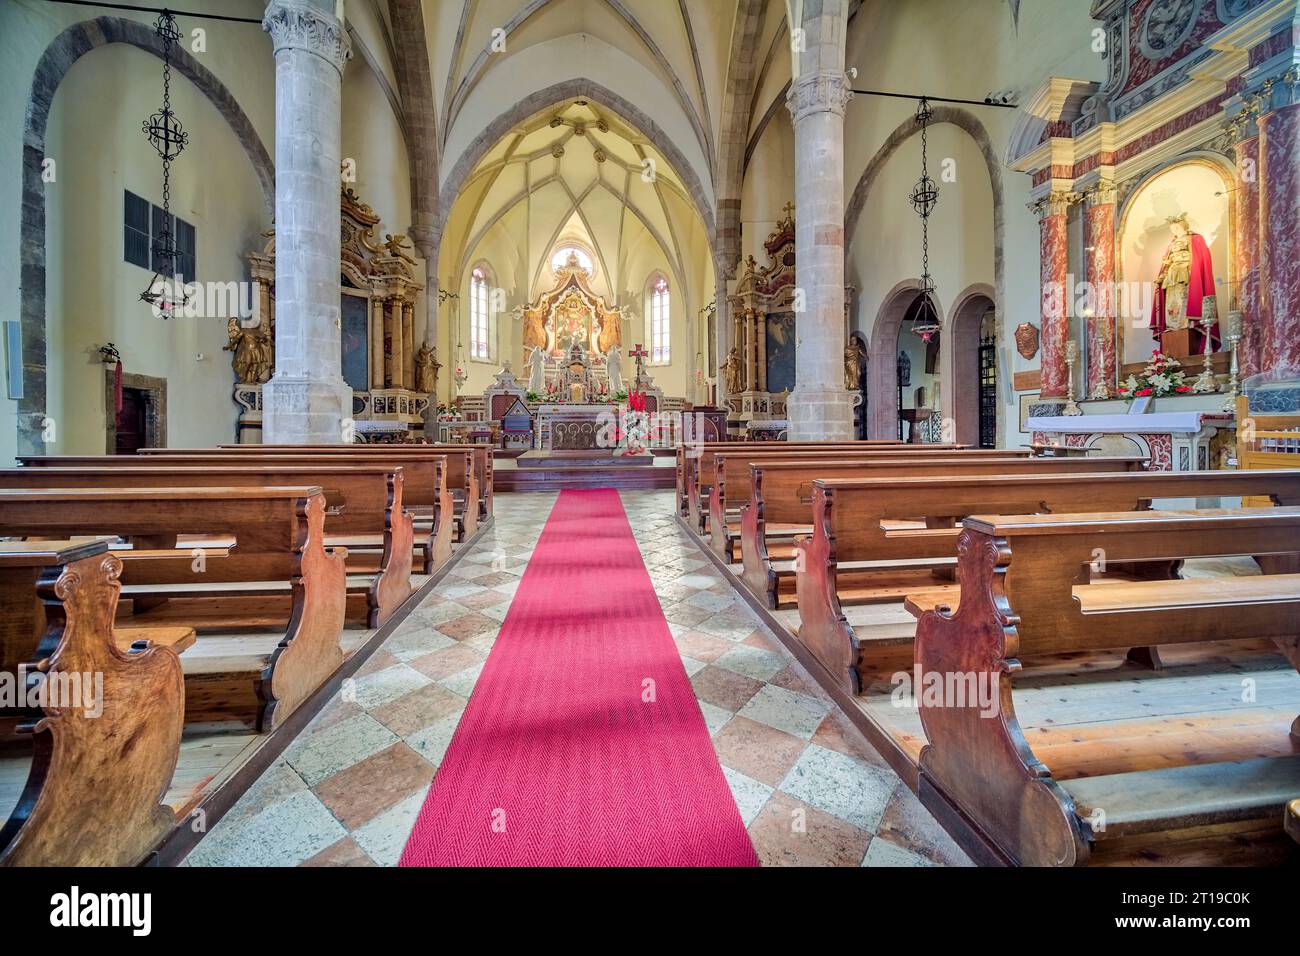 Inneneinrichtung und Altar in der Kirche Basilica dei Santi Martiri dell'Anaunia. Stockfoto